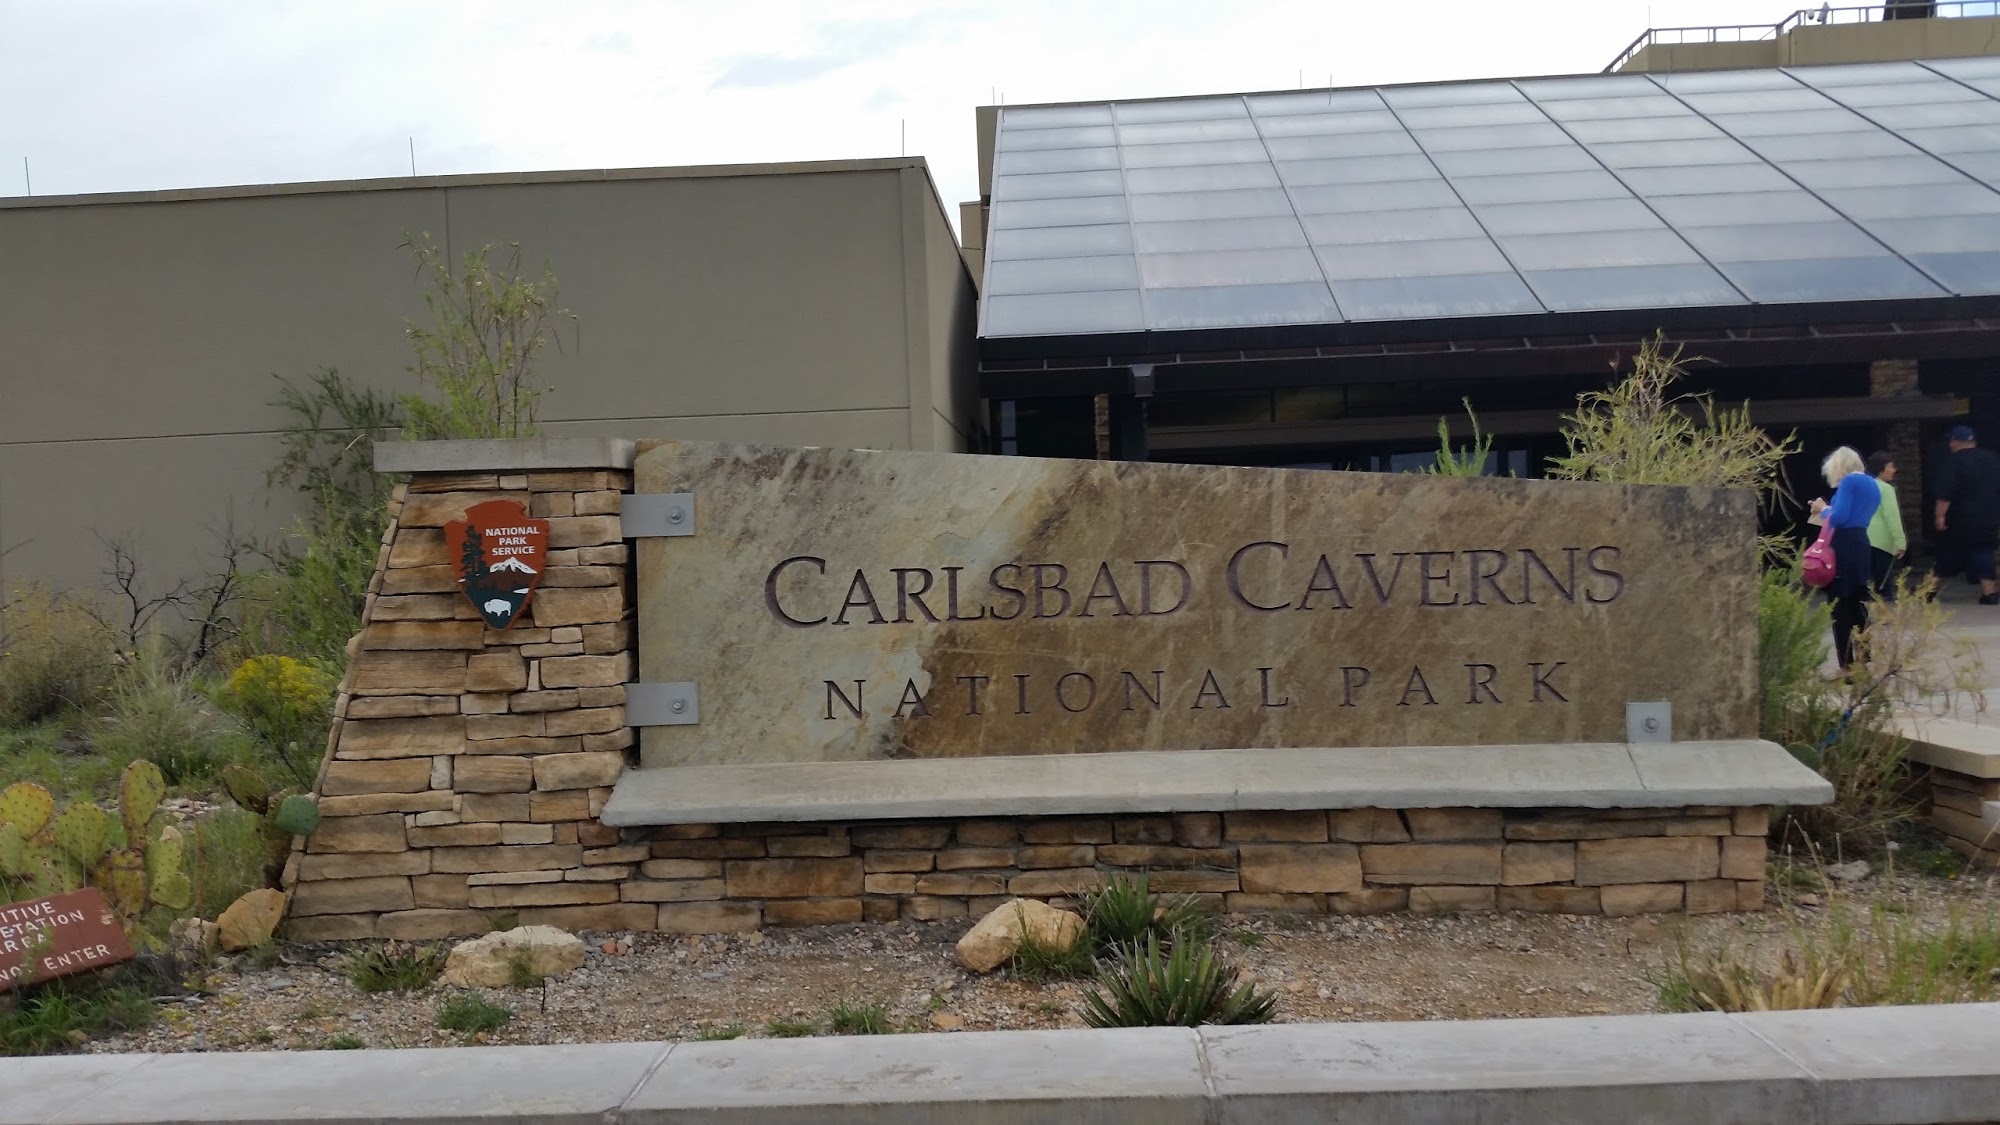 Carlsbad Caverns Trading Company